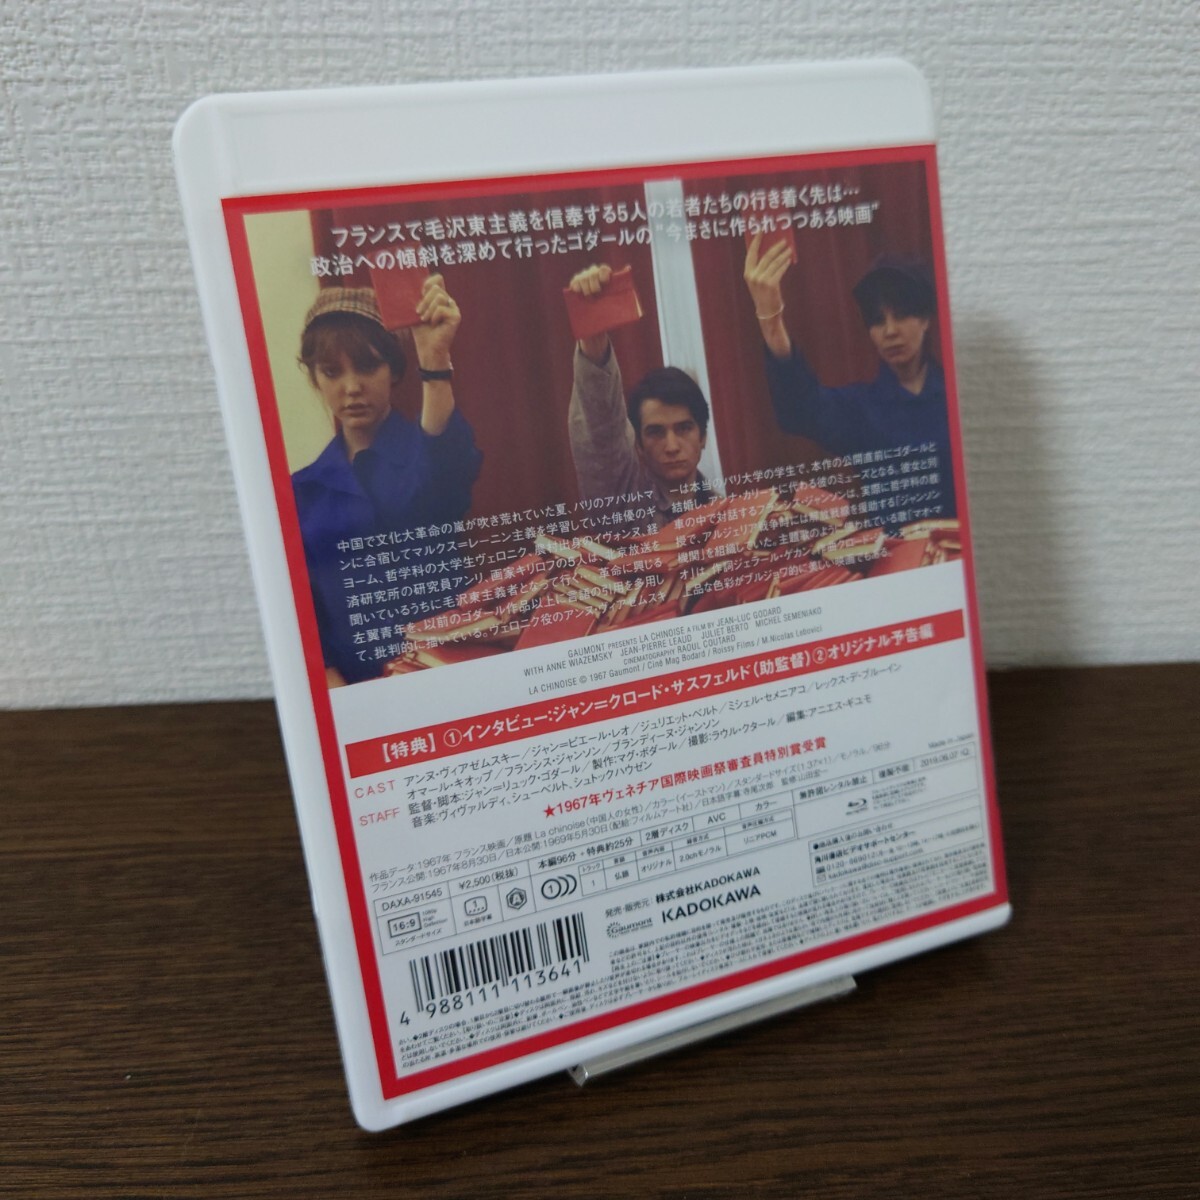 [1 иен старт ] China женщина (\'67.) Blu-ray cell версия 